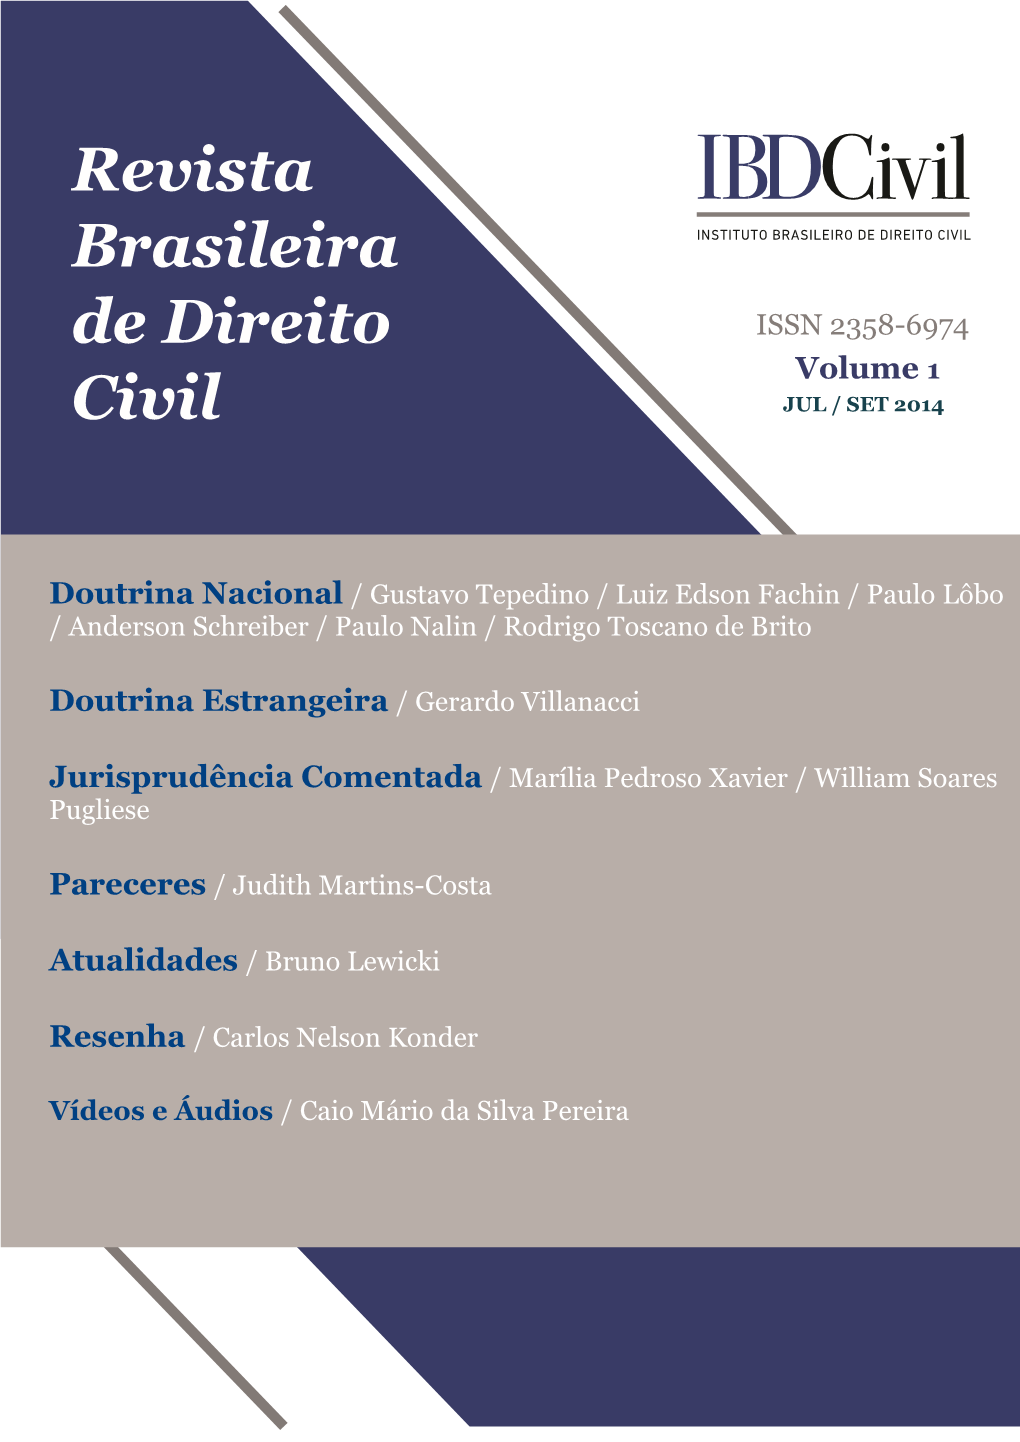 ISSN 2358-6974 De Direito Volume 1 Civil JUL / SET 2014